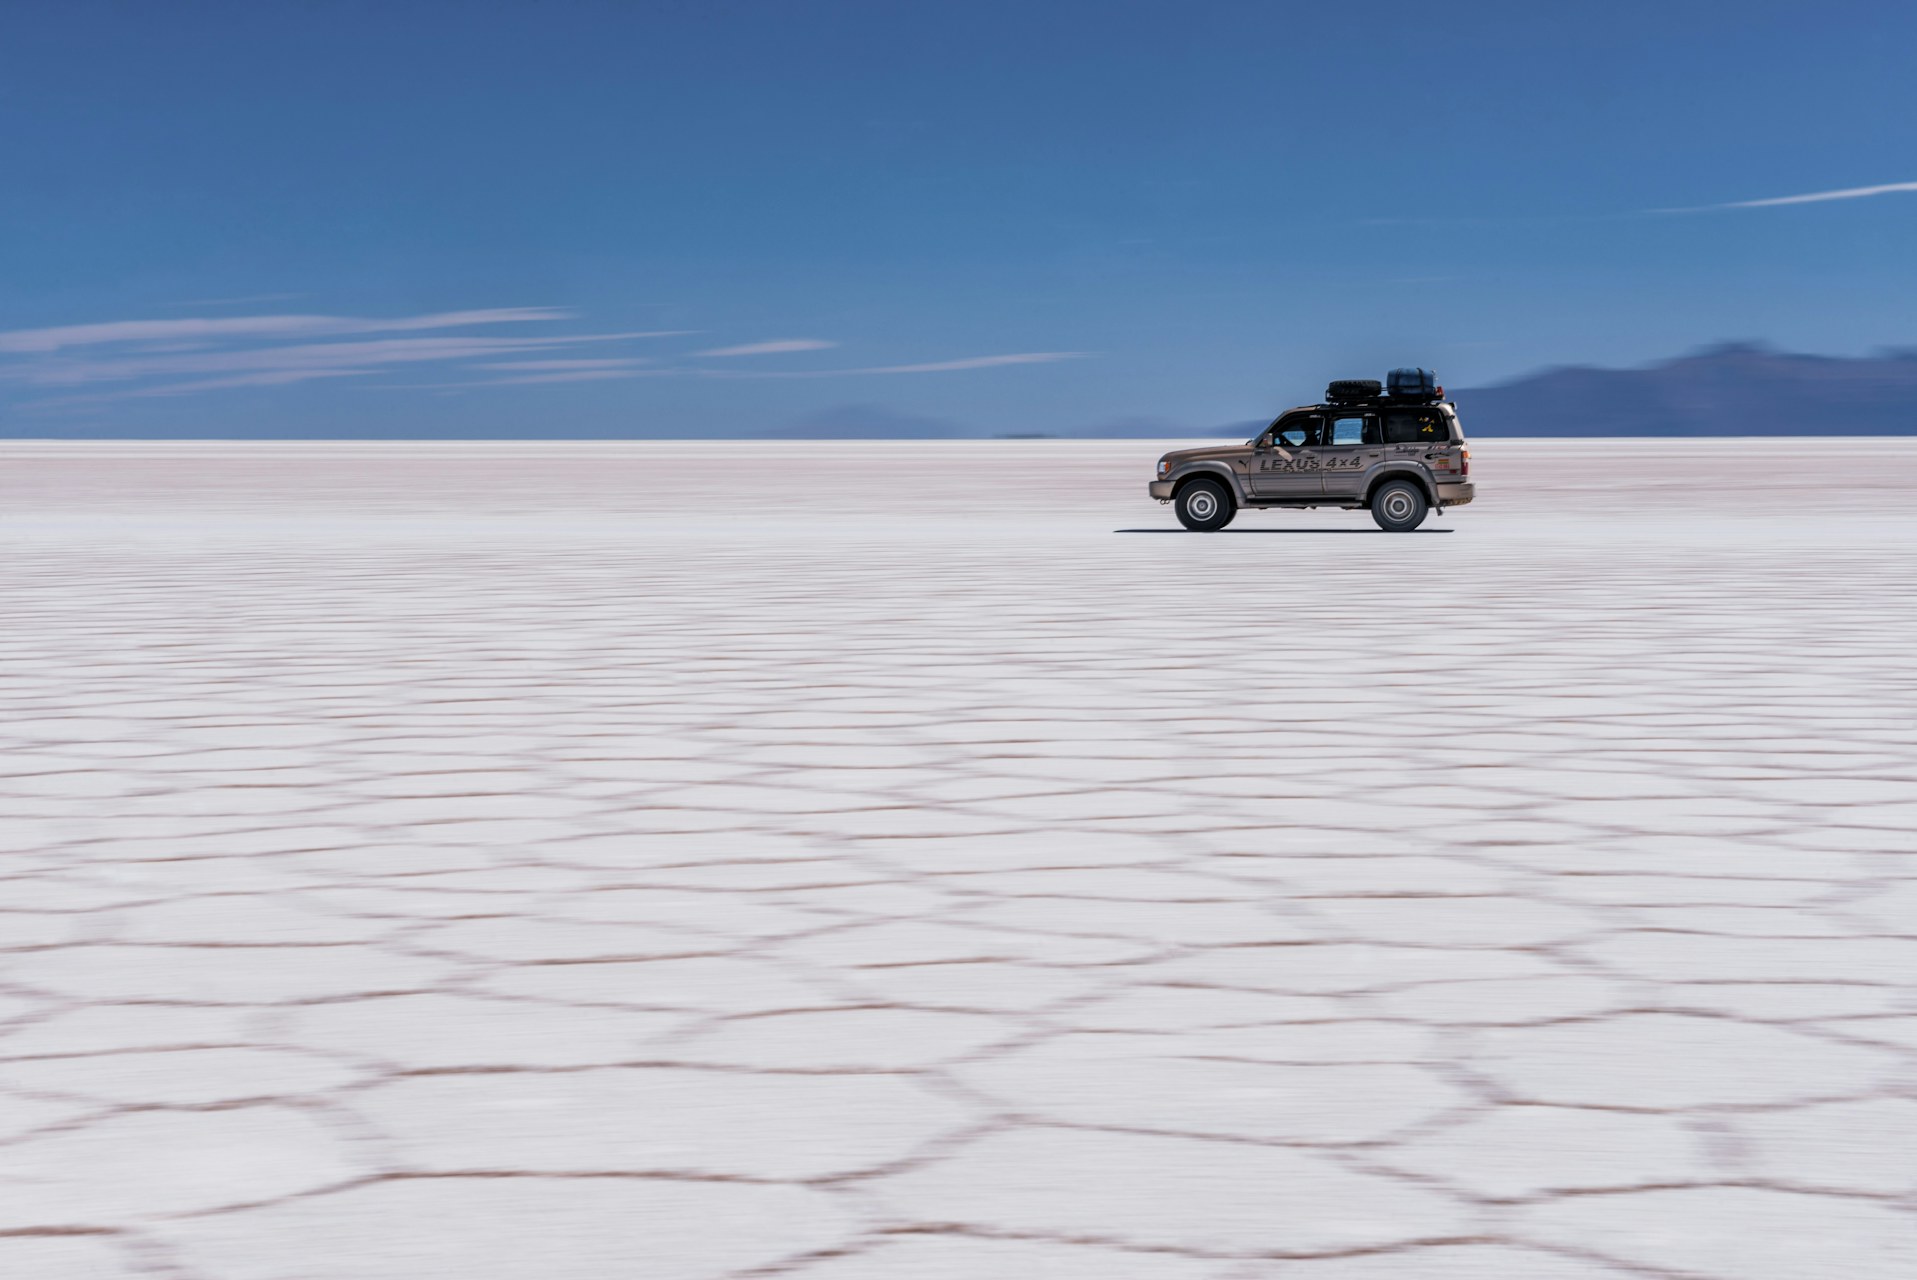 Bolivia Travel Landscape Photography 4 WD Tour of Uyuni Salt Flats Salar de Uyuni Uyuni Bolivia South America